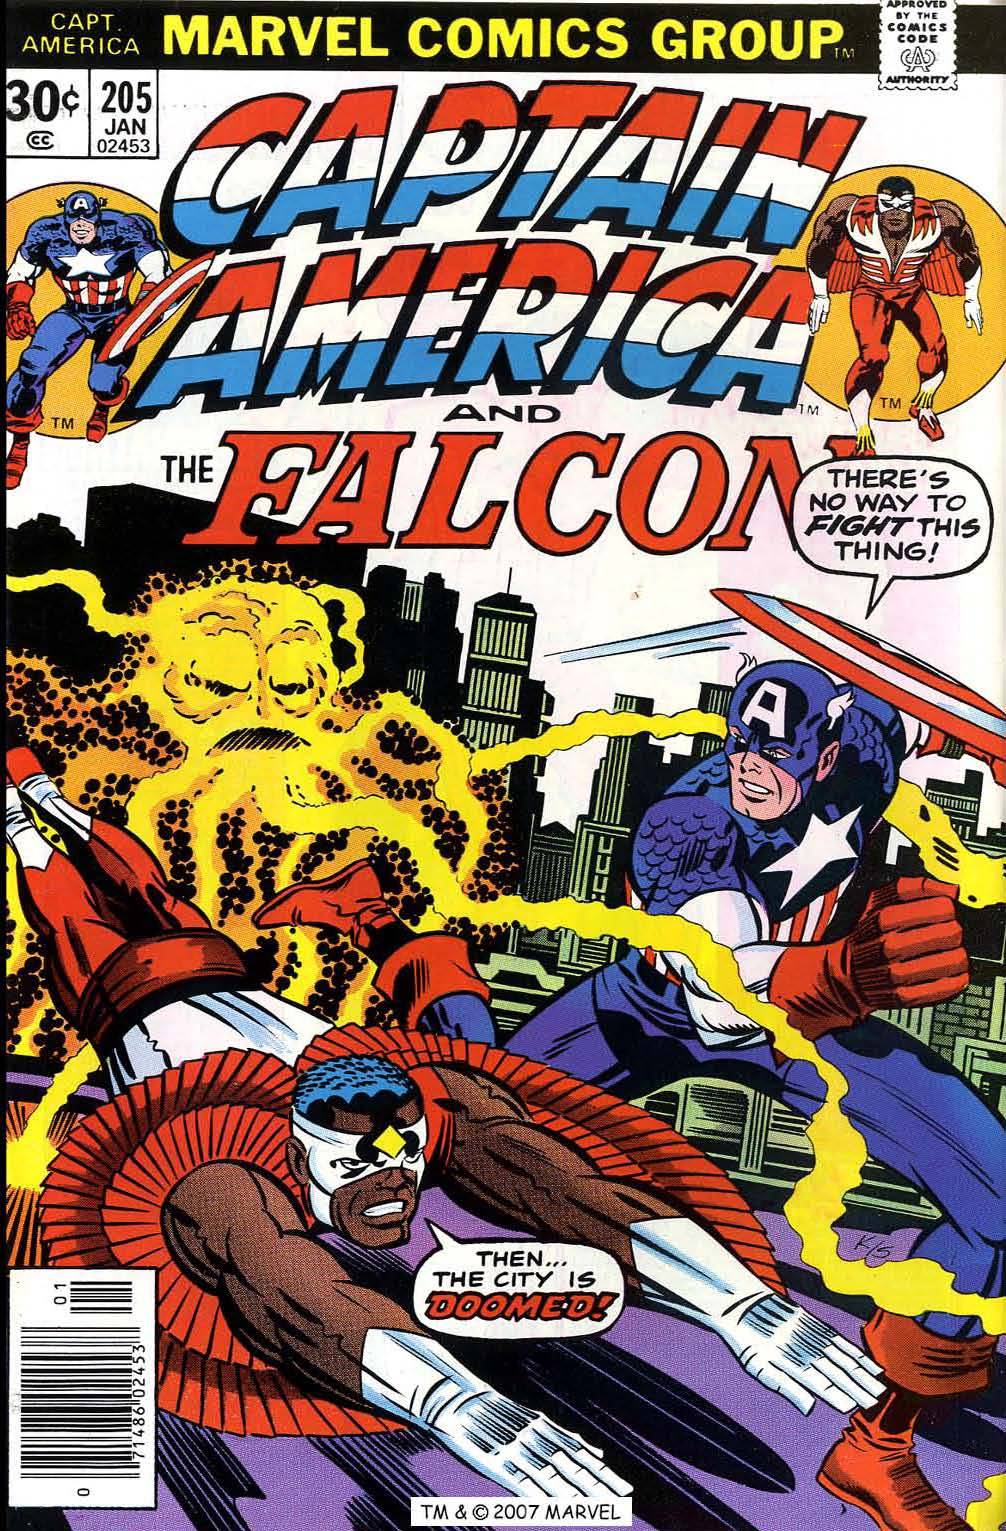 comicbookcovers:
“Captain America #205, January 1977, Pencils: Jack Kirby, Inks: Joe Sinnott
”